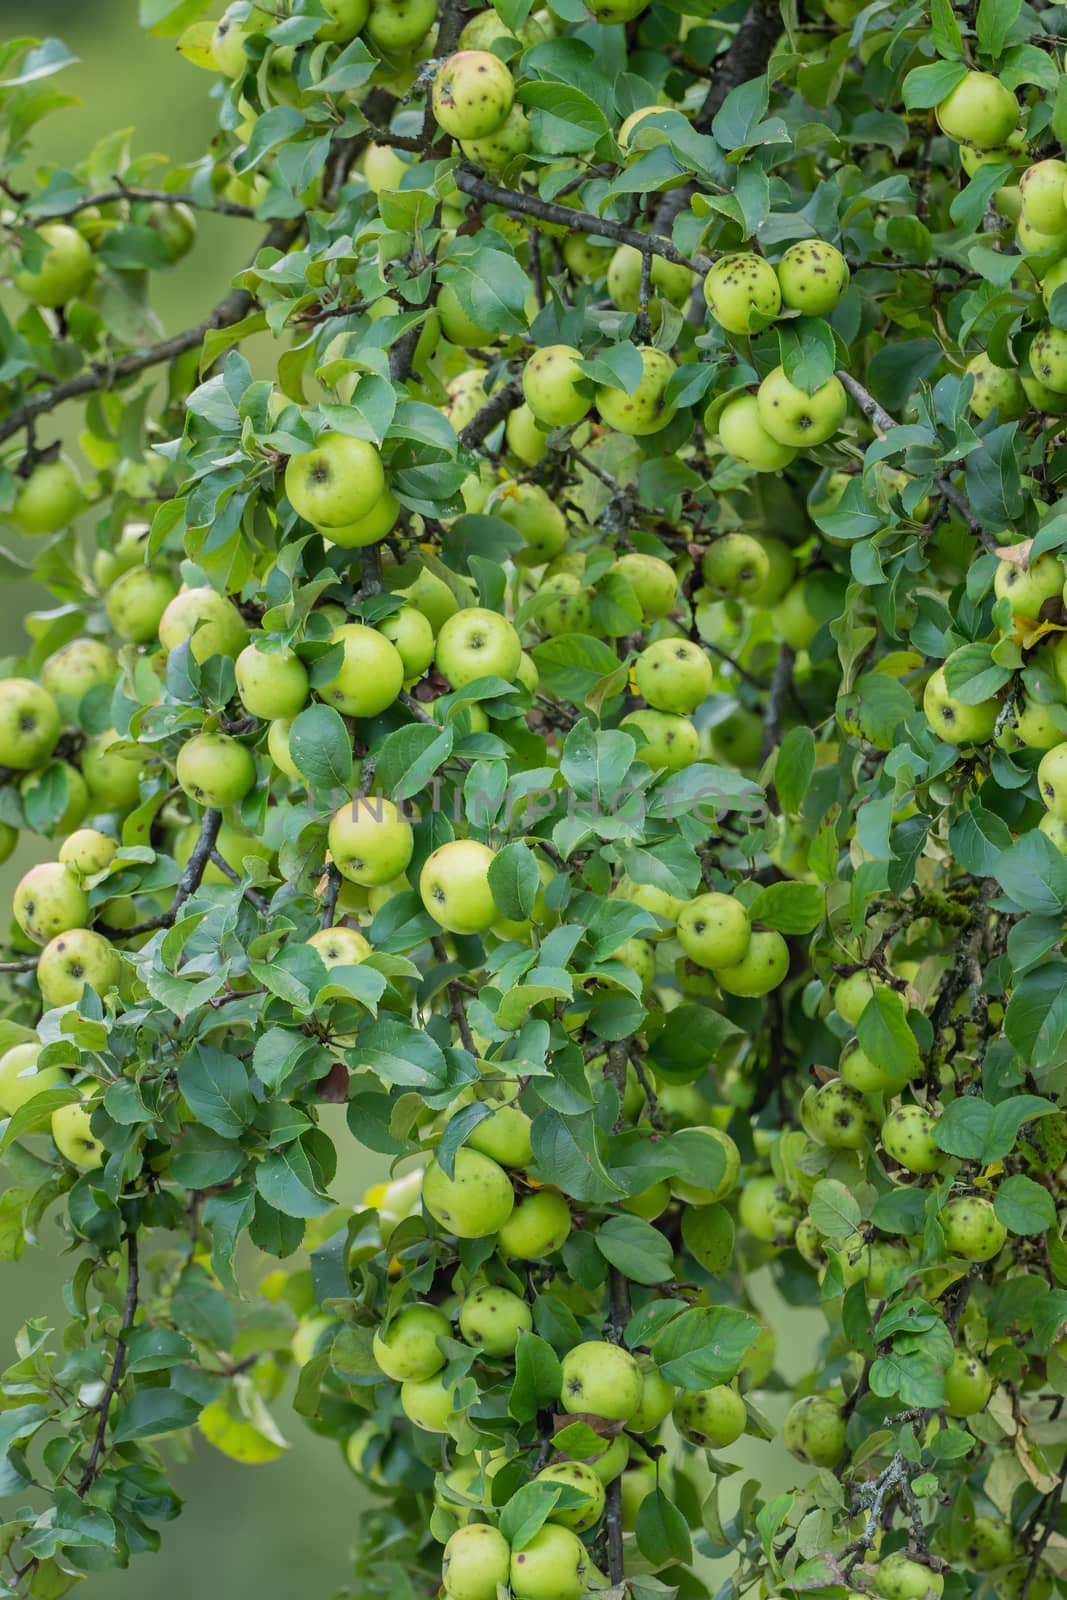 A branch full of ripe green apples by sandra_fotodesign